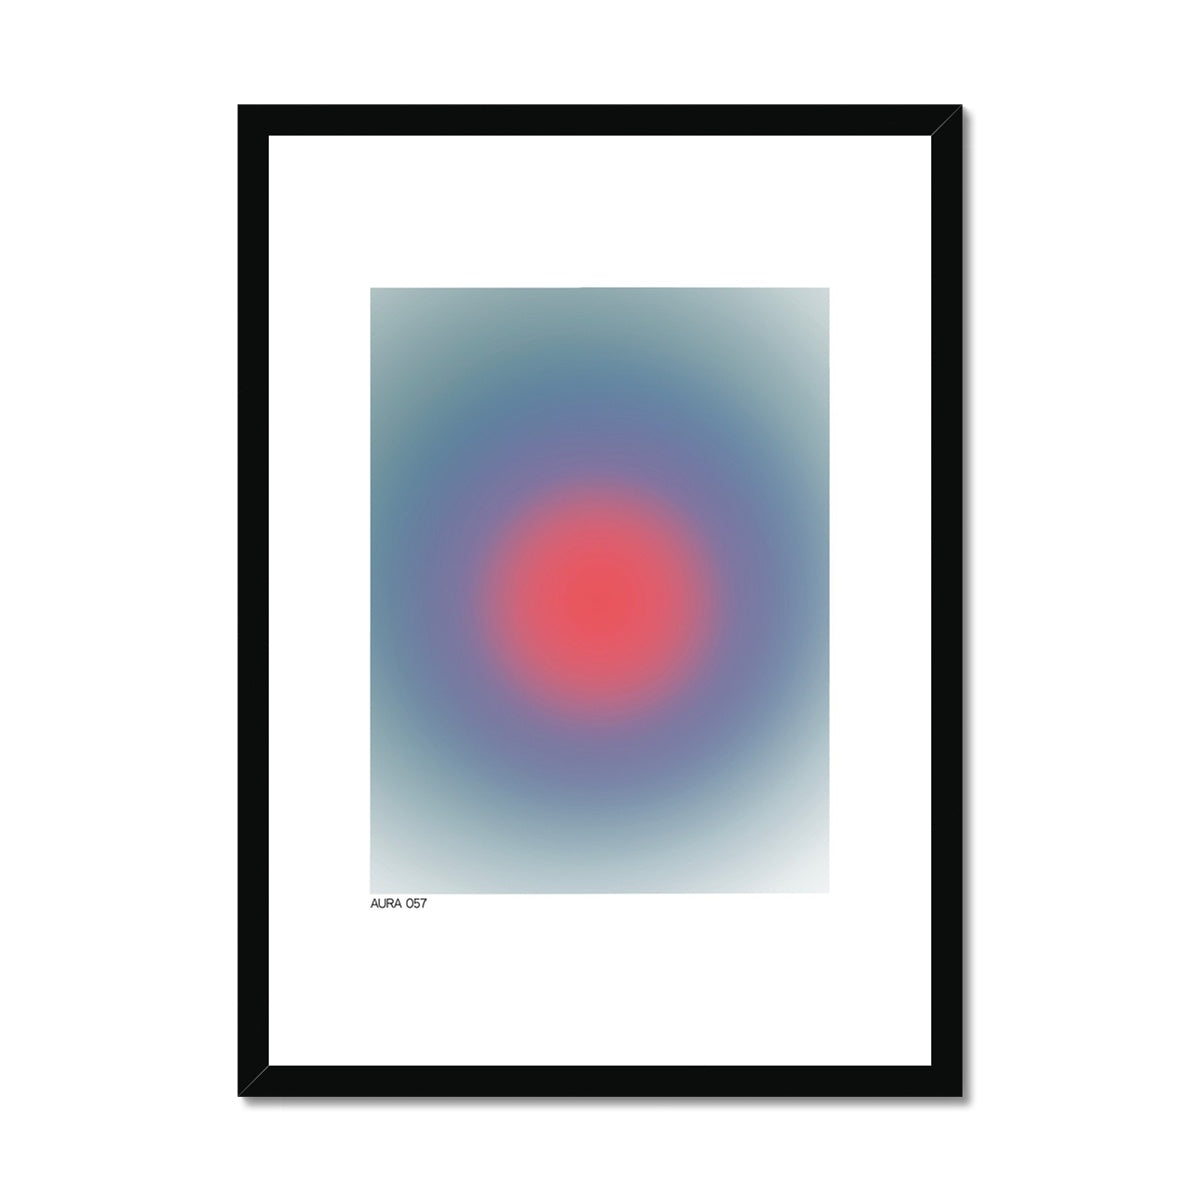 aura 057 Framed & Mounted Print